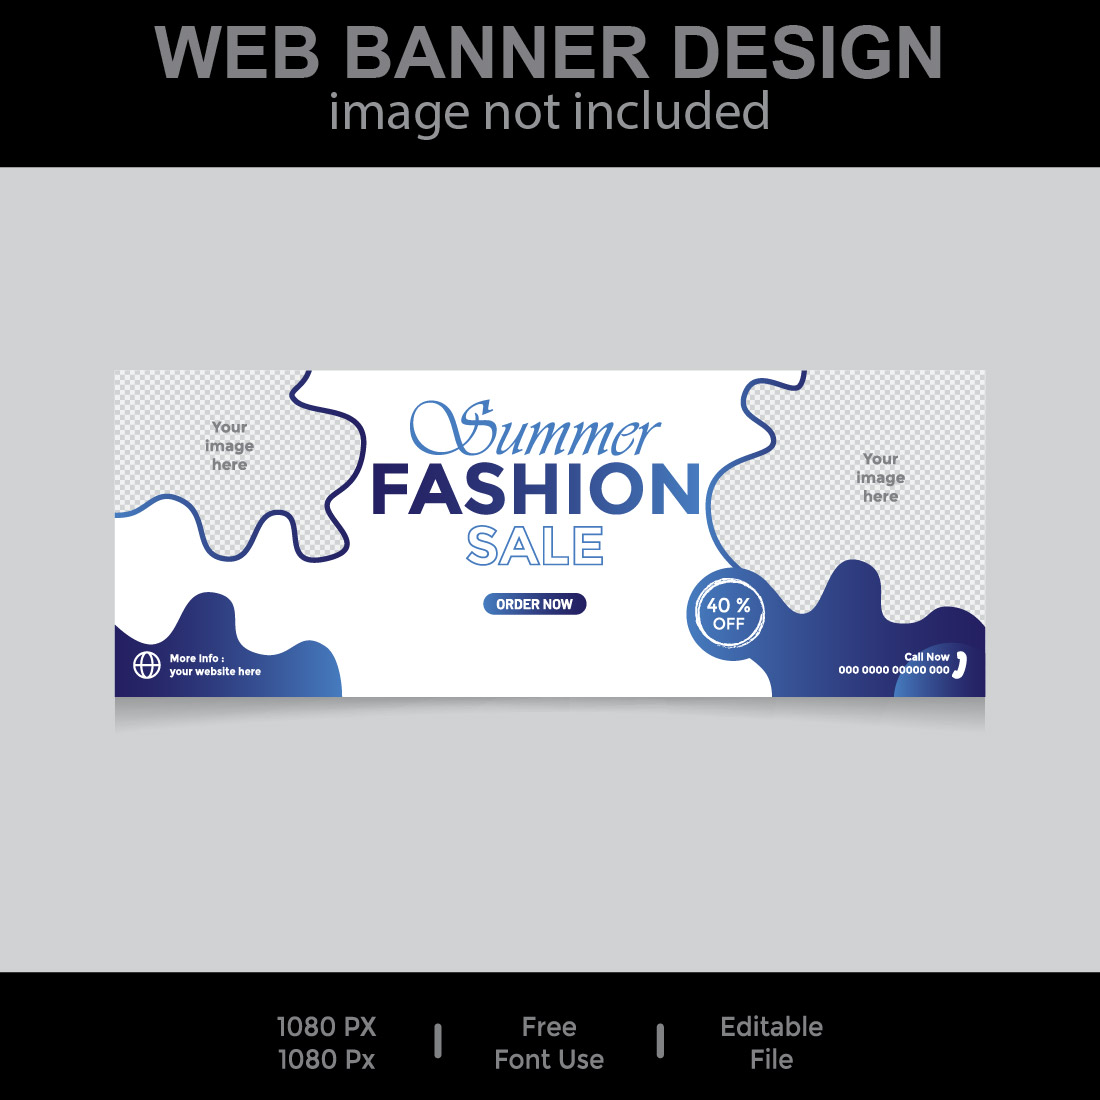 Web Banner Design cover image.